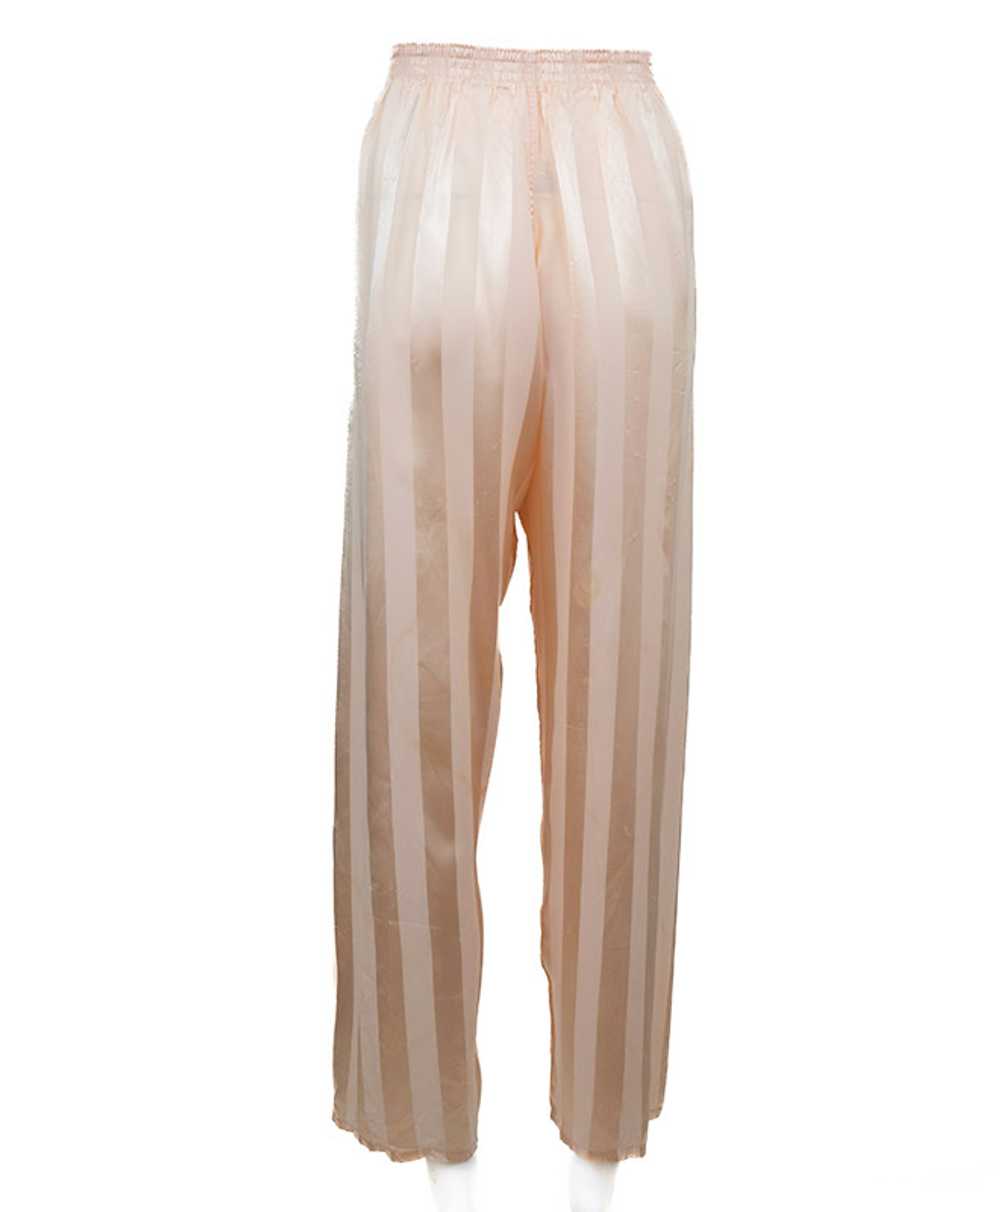 Vintage Rayon Satin Striped Pajama Pants - image 3